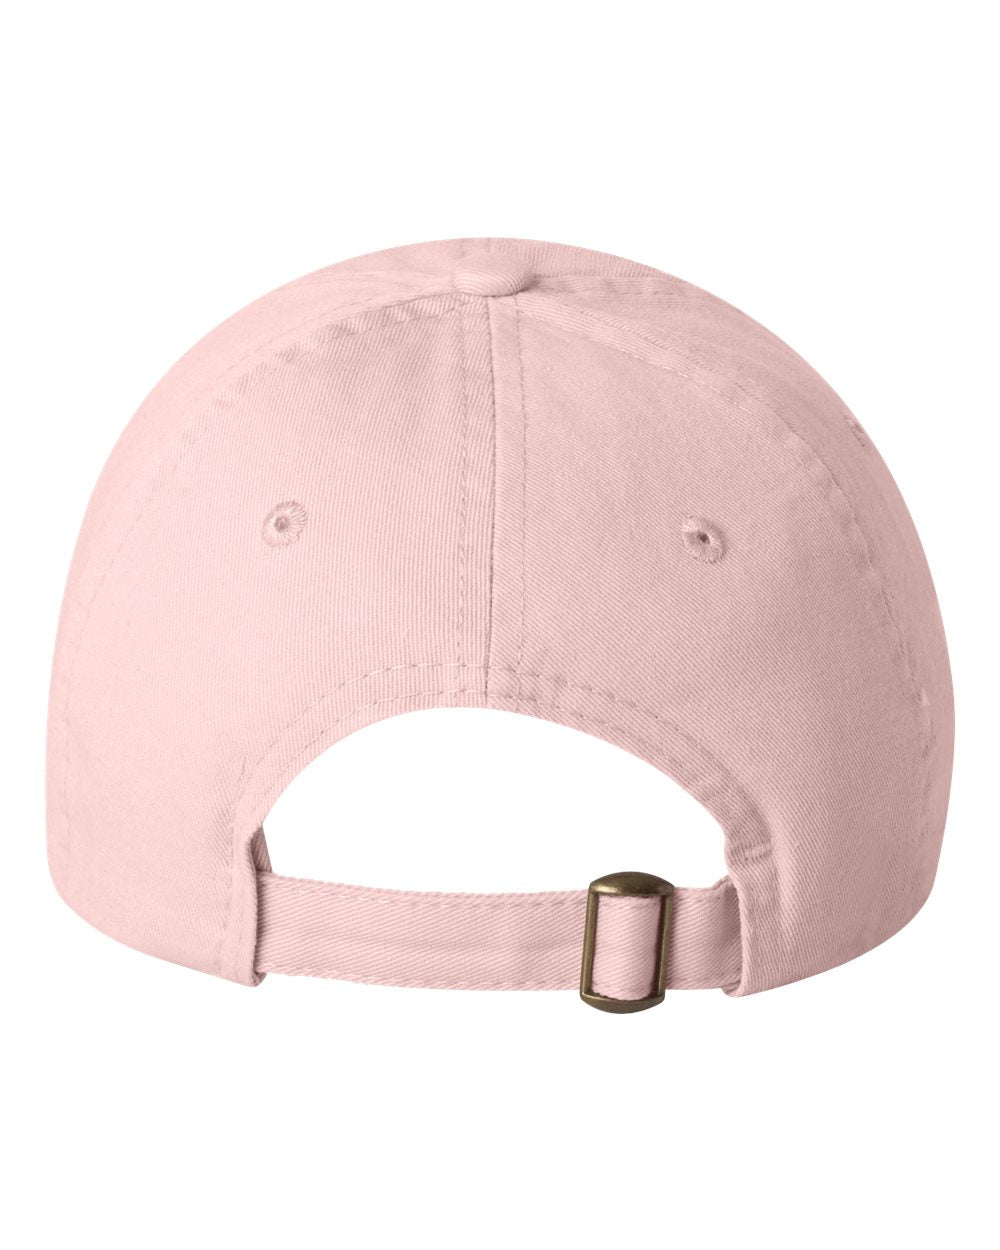 Youth Unisex Cap, Light Pink